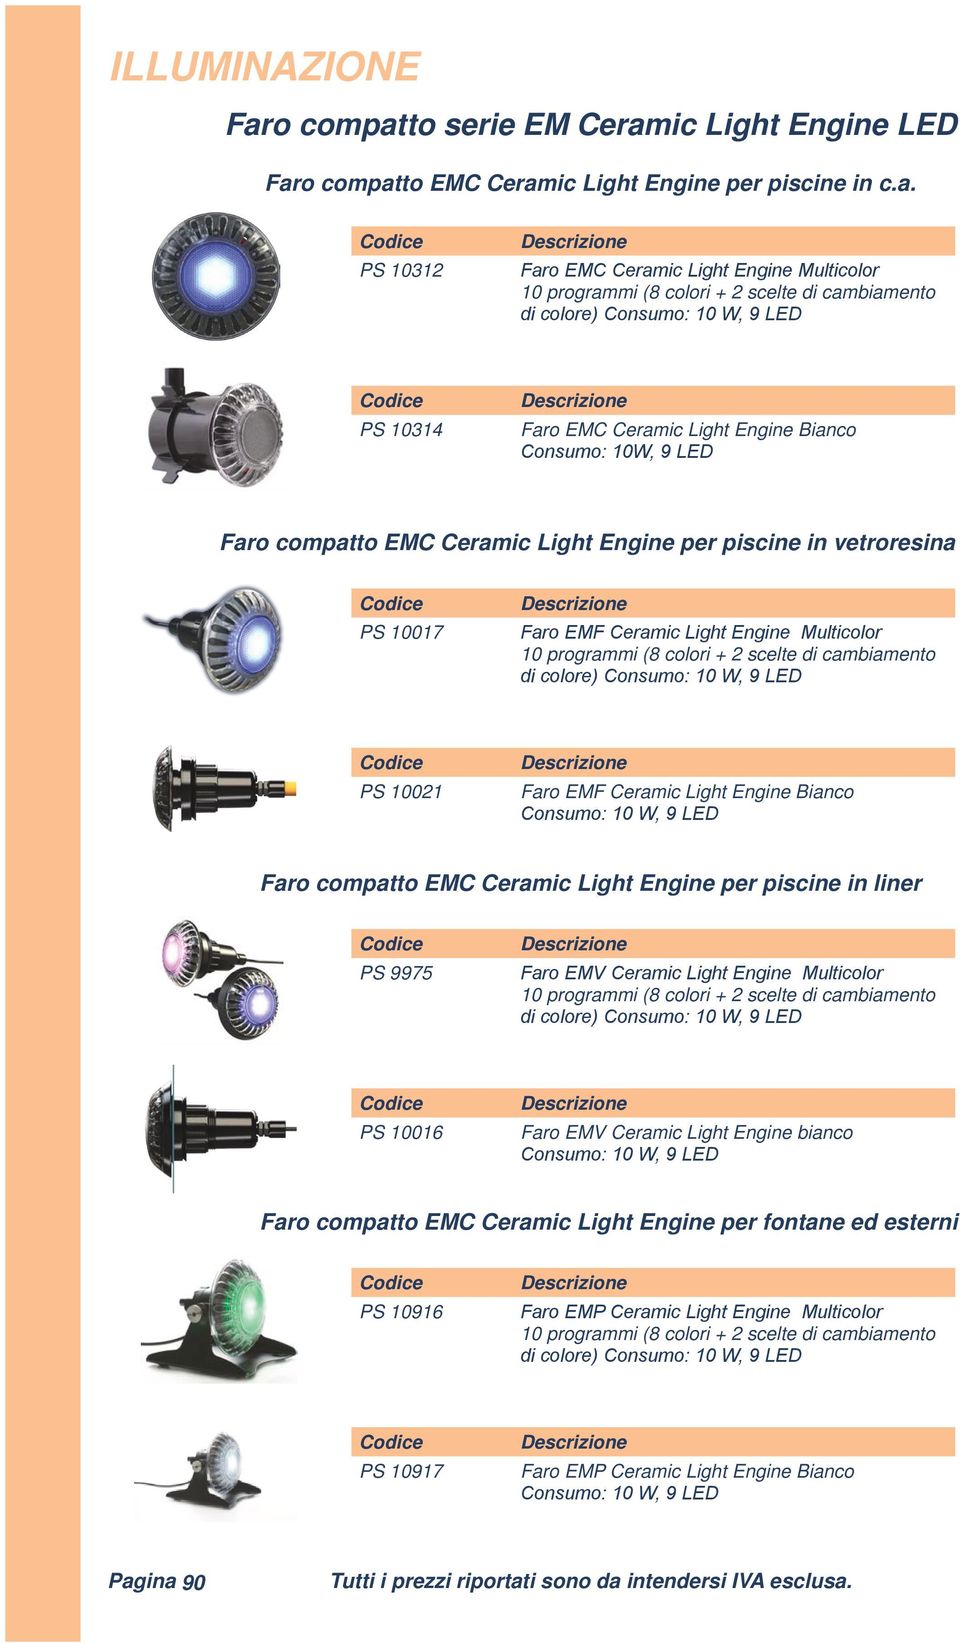 9 LED PS 10021 Faro EMF Ceramic Light Engine Bianco Consumo: 10 W, 9 LED Faro compatto EMC Ceramic Light Engine per piscine in liner PS 9975 Faro EMV Ceramic Light Engine Multicolor di colore)